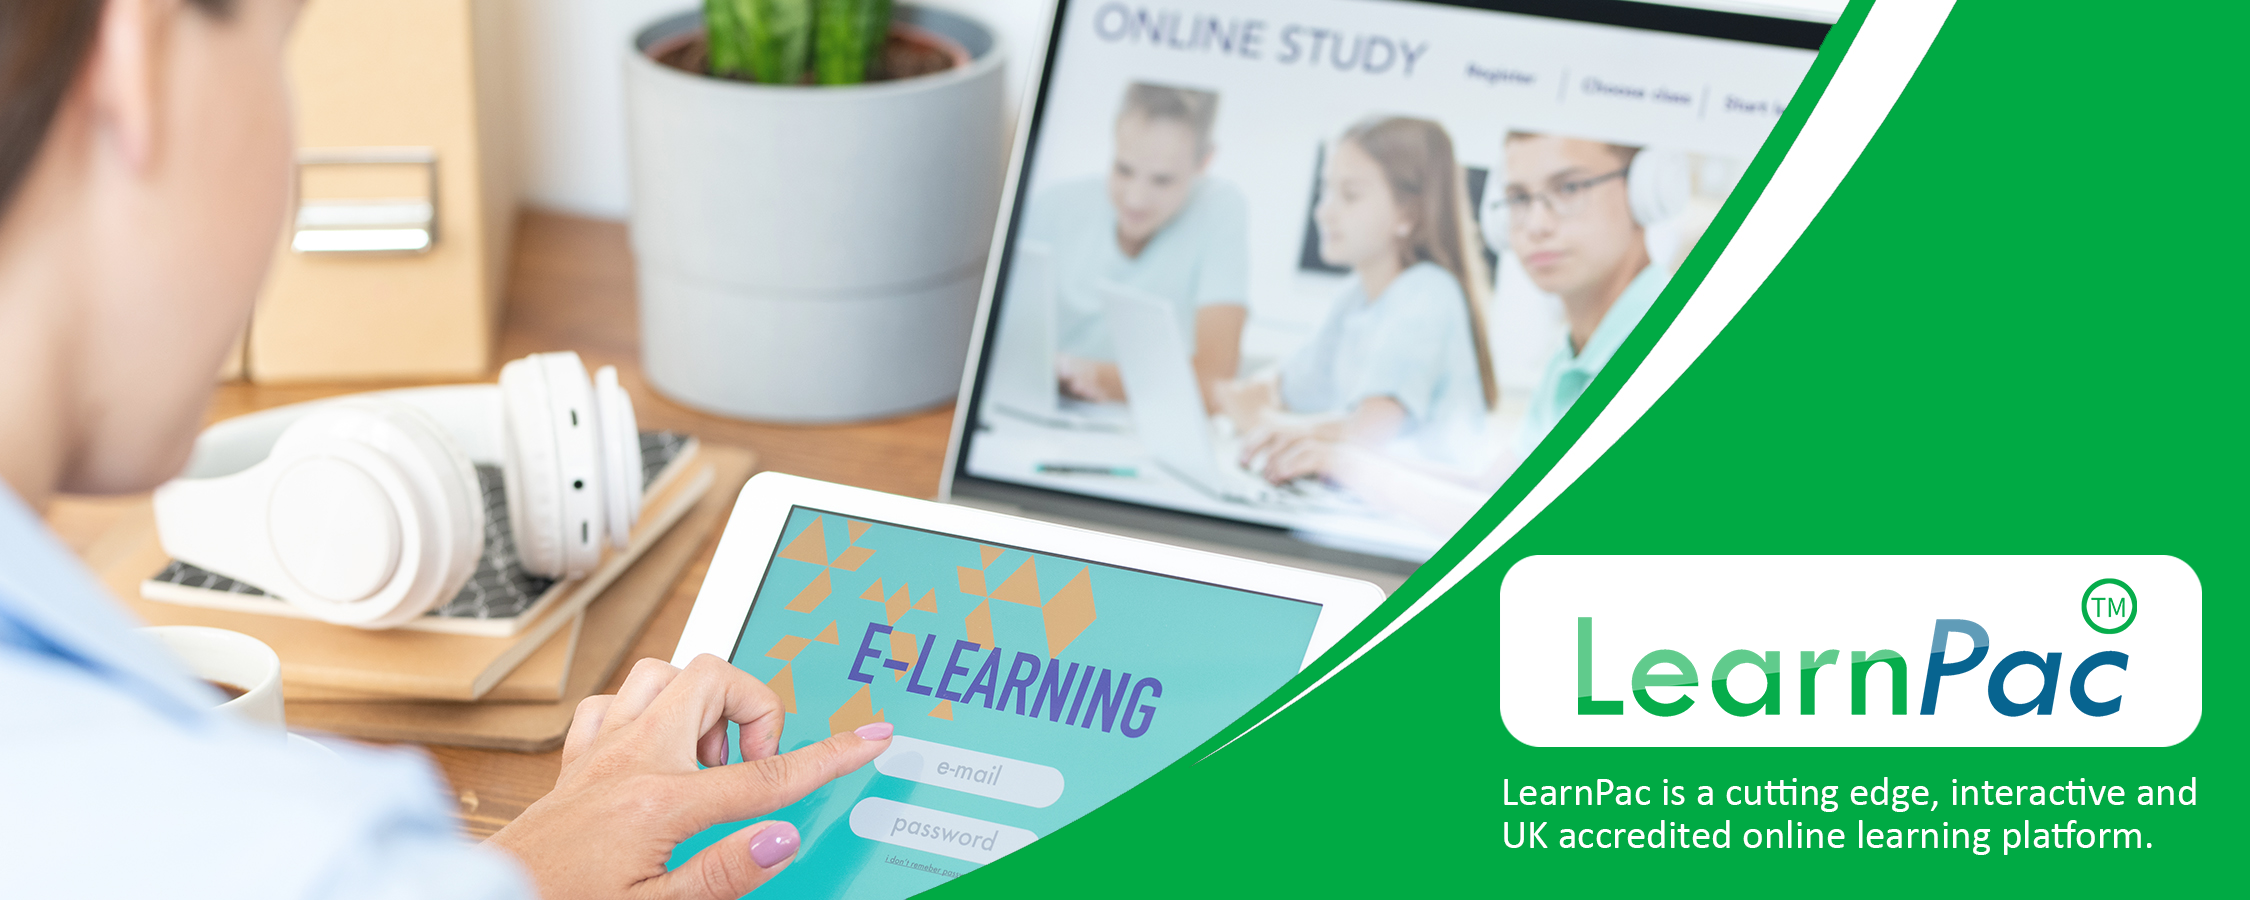 Basic Bookkeeping Training - Online Learning Courses - E-Learning Courses - LearnPac Systems UK -